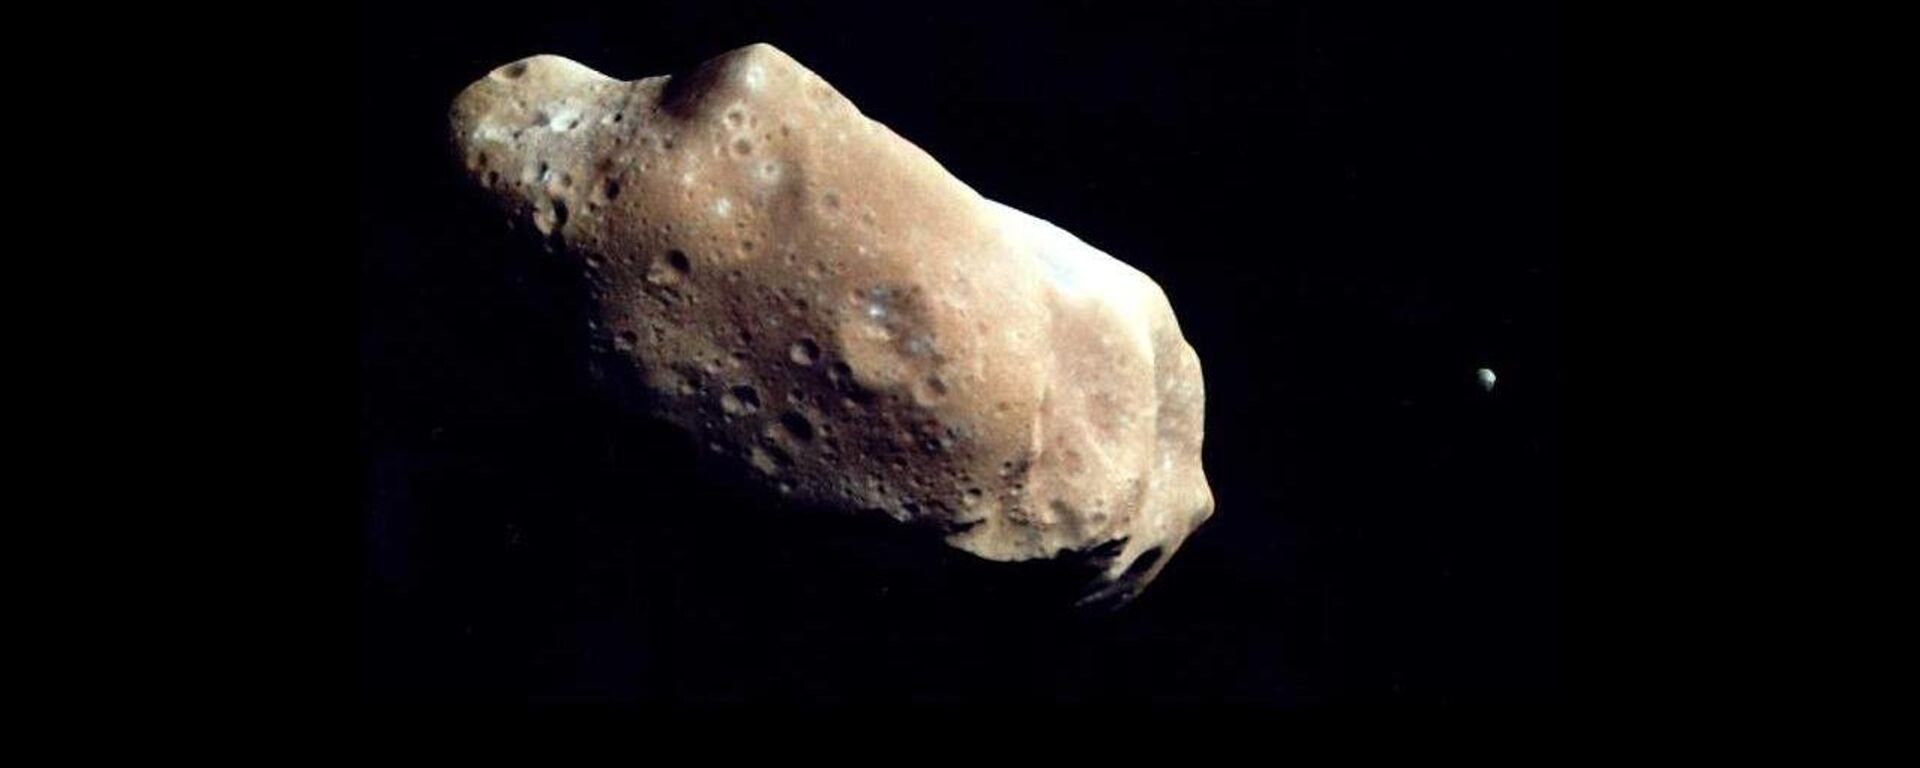 Un asteroide (imagen referencial) - Sputnik Mundo, 1920, 27.04.2021